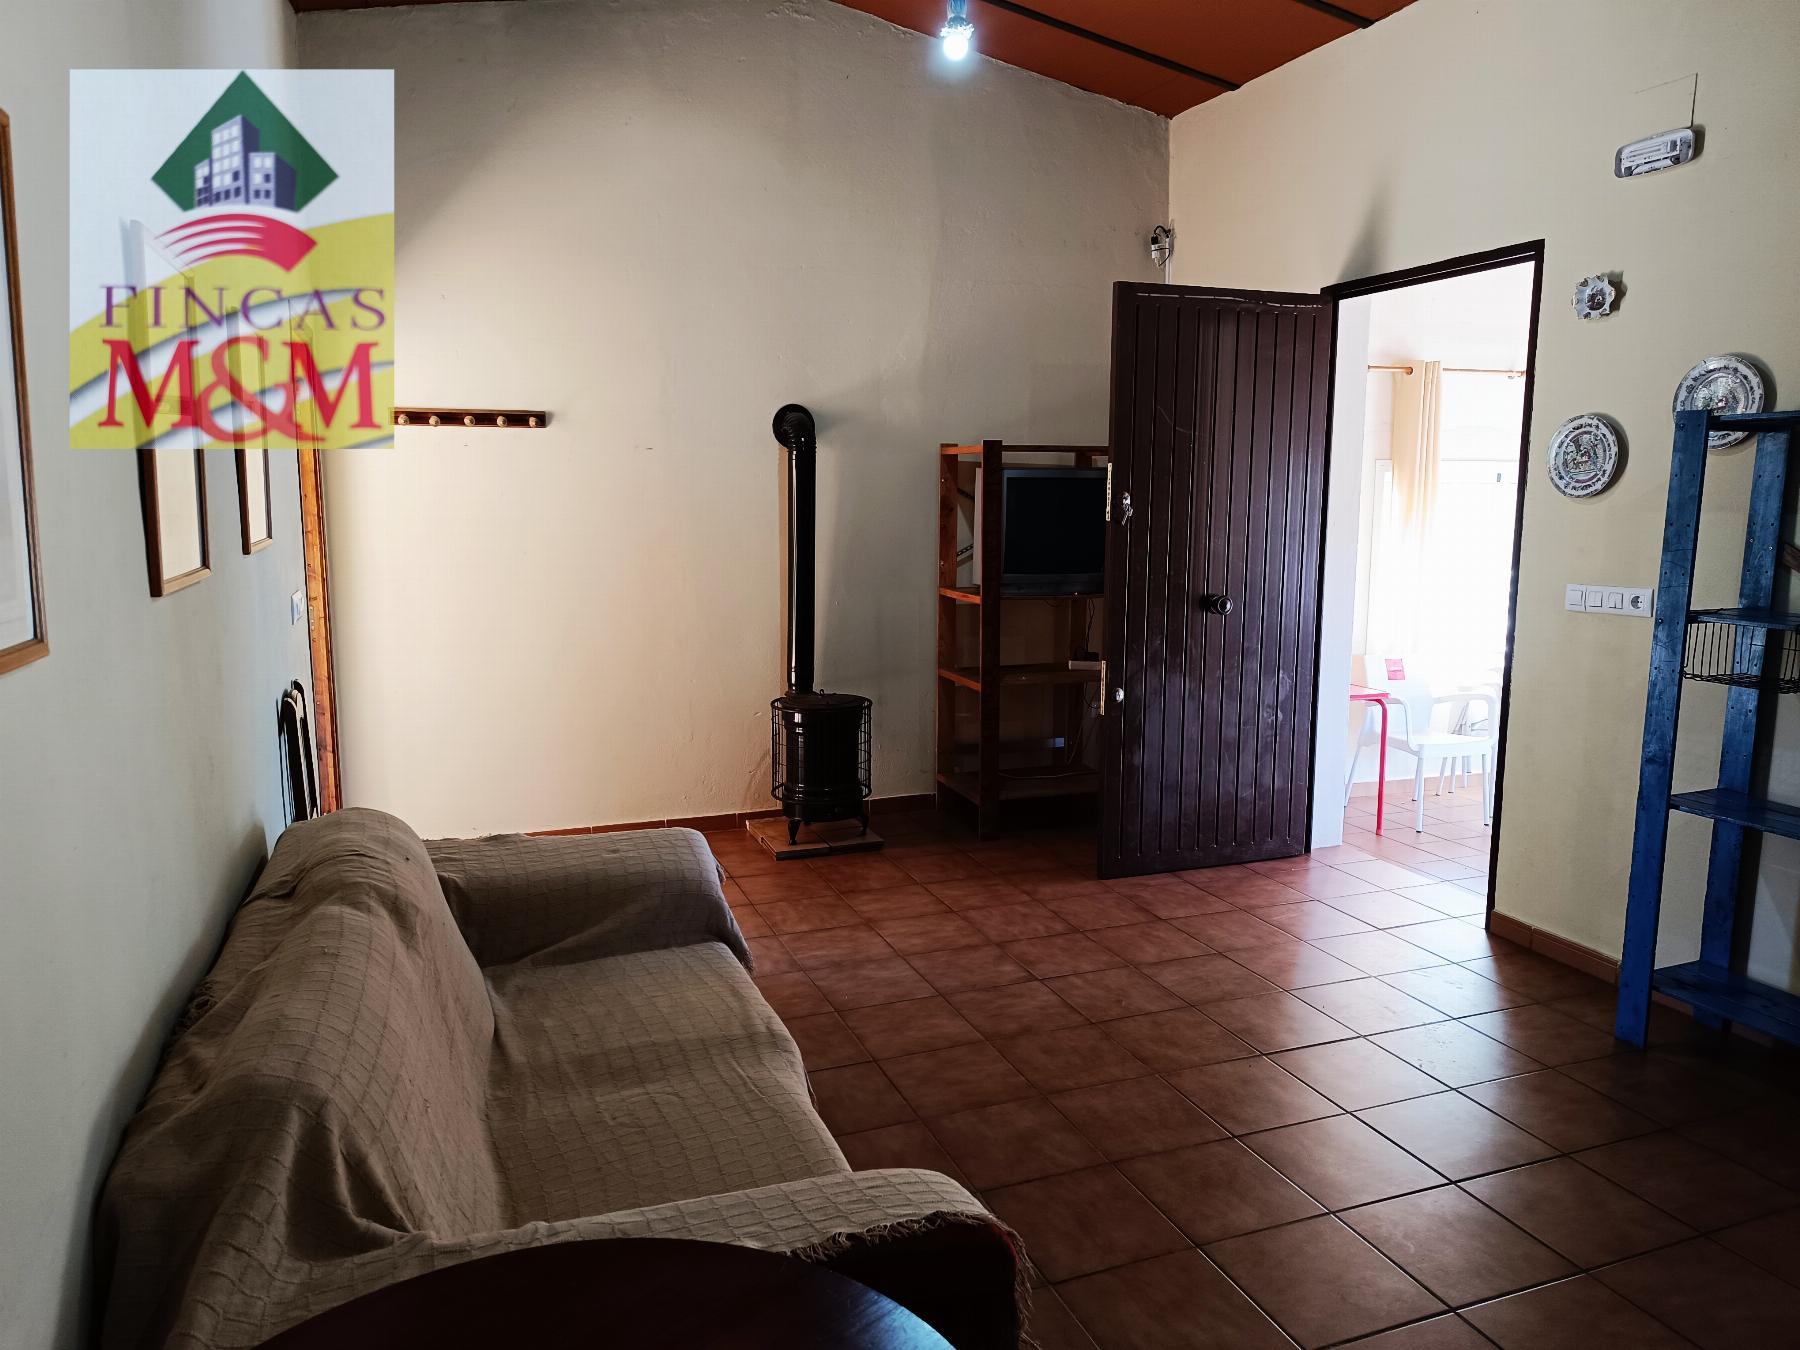 For sale of rural property in Benacazón